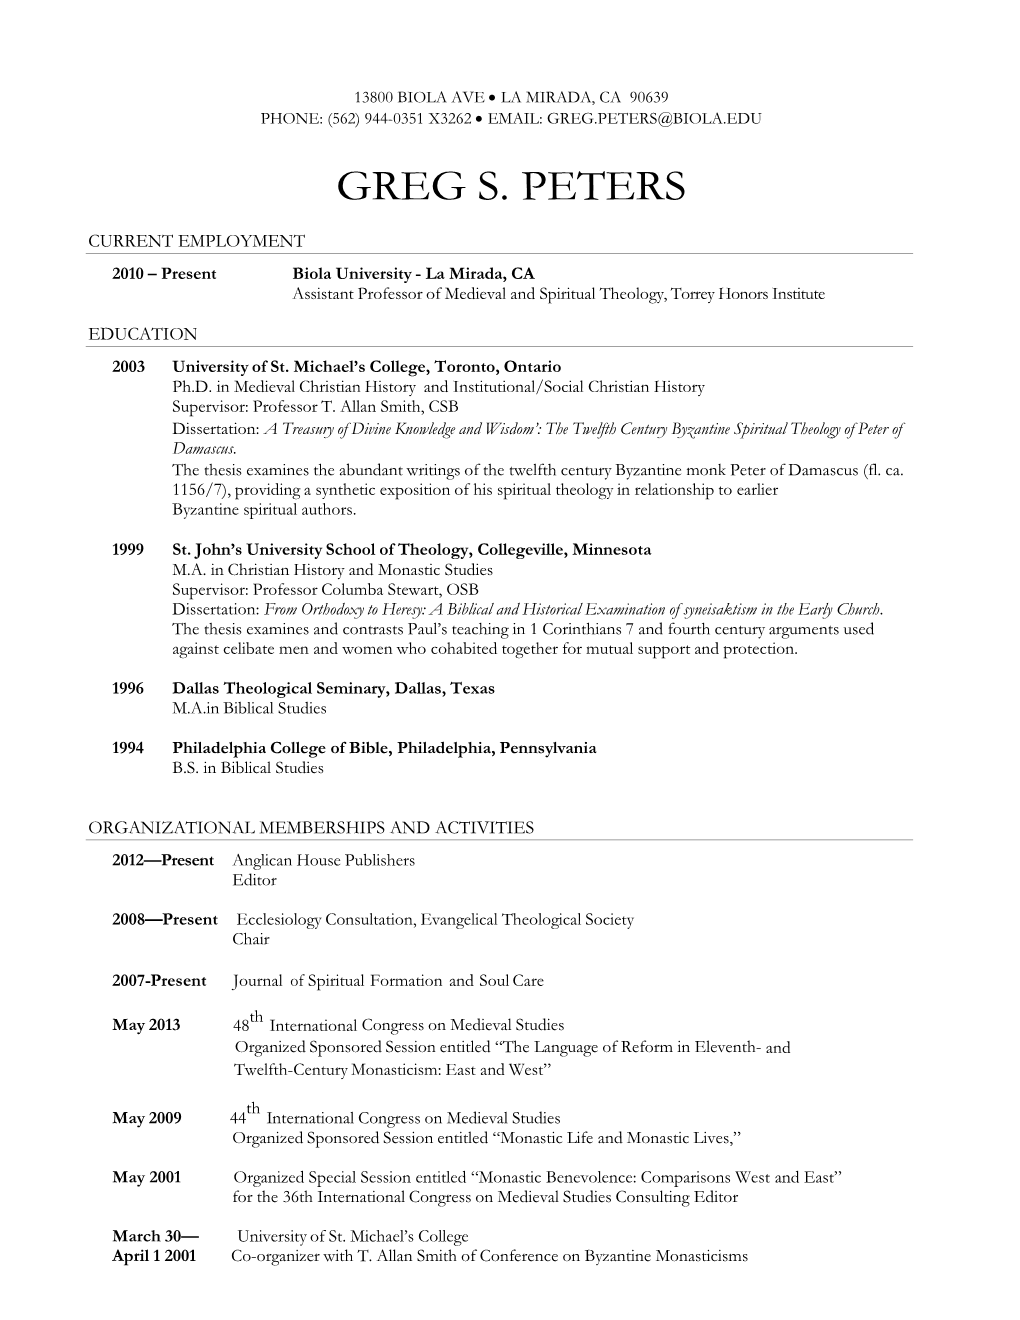 Greg S. Peters